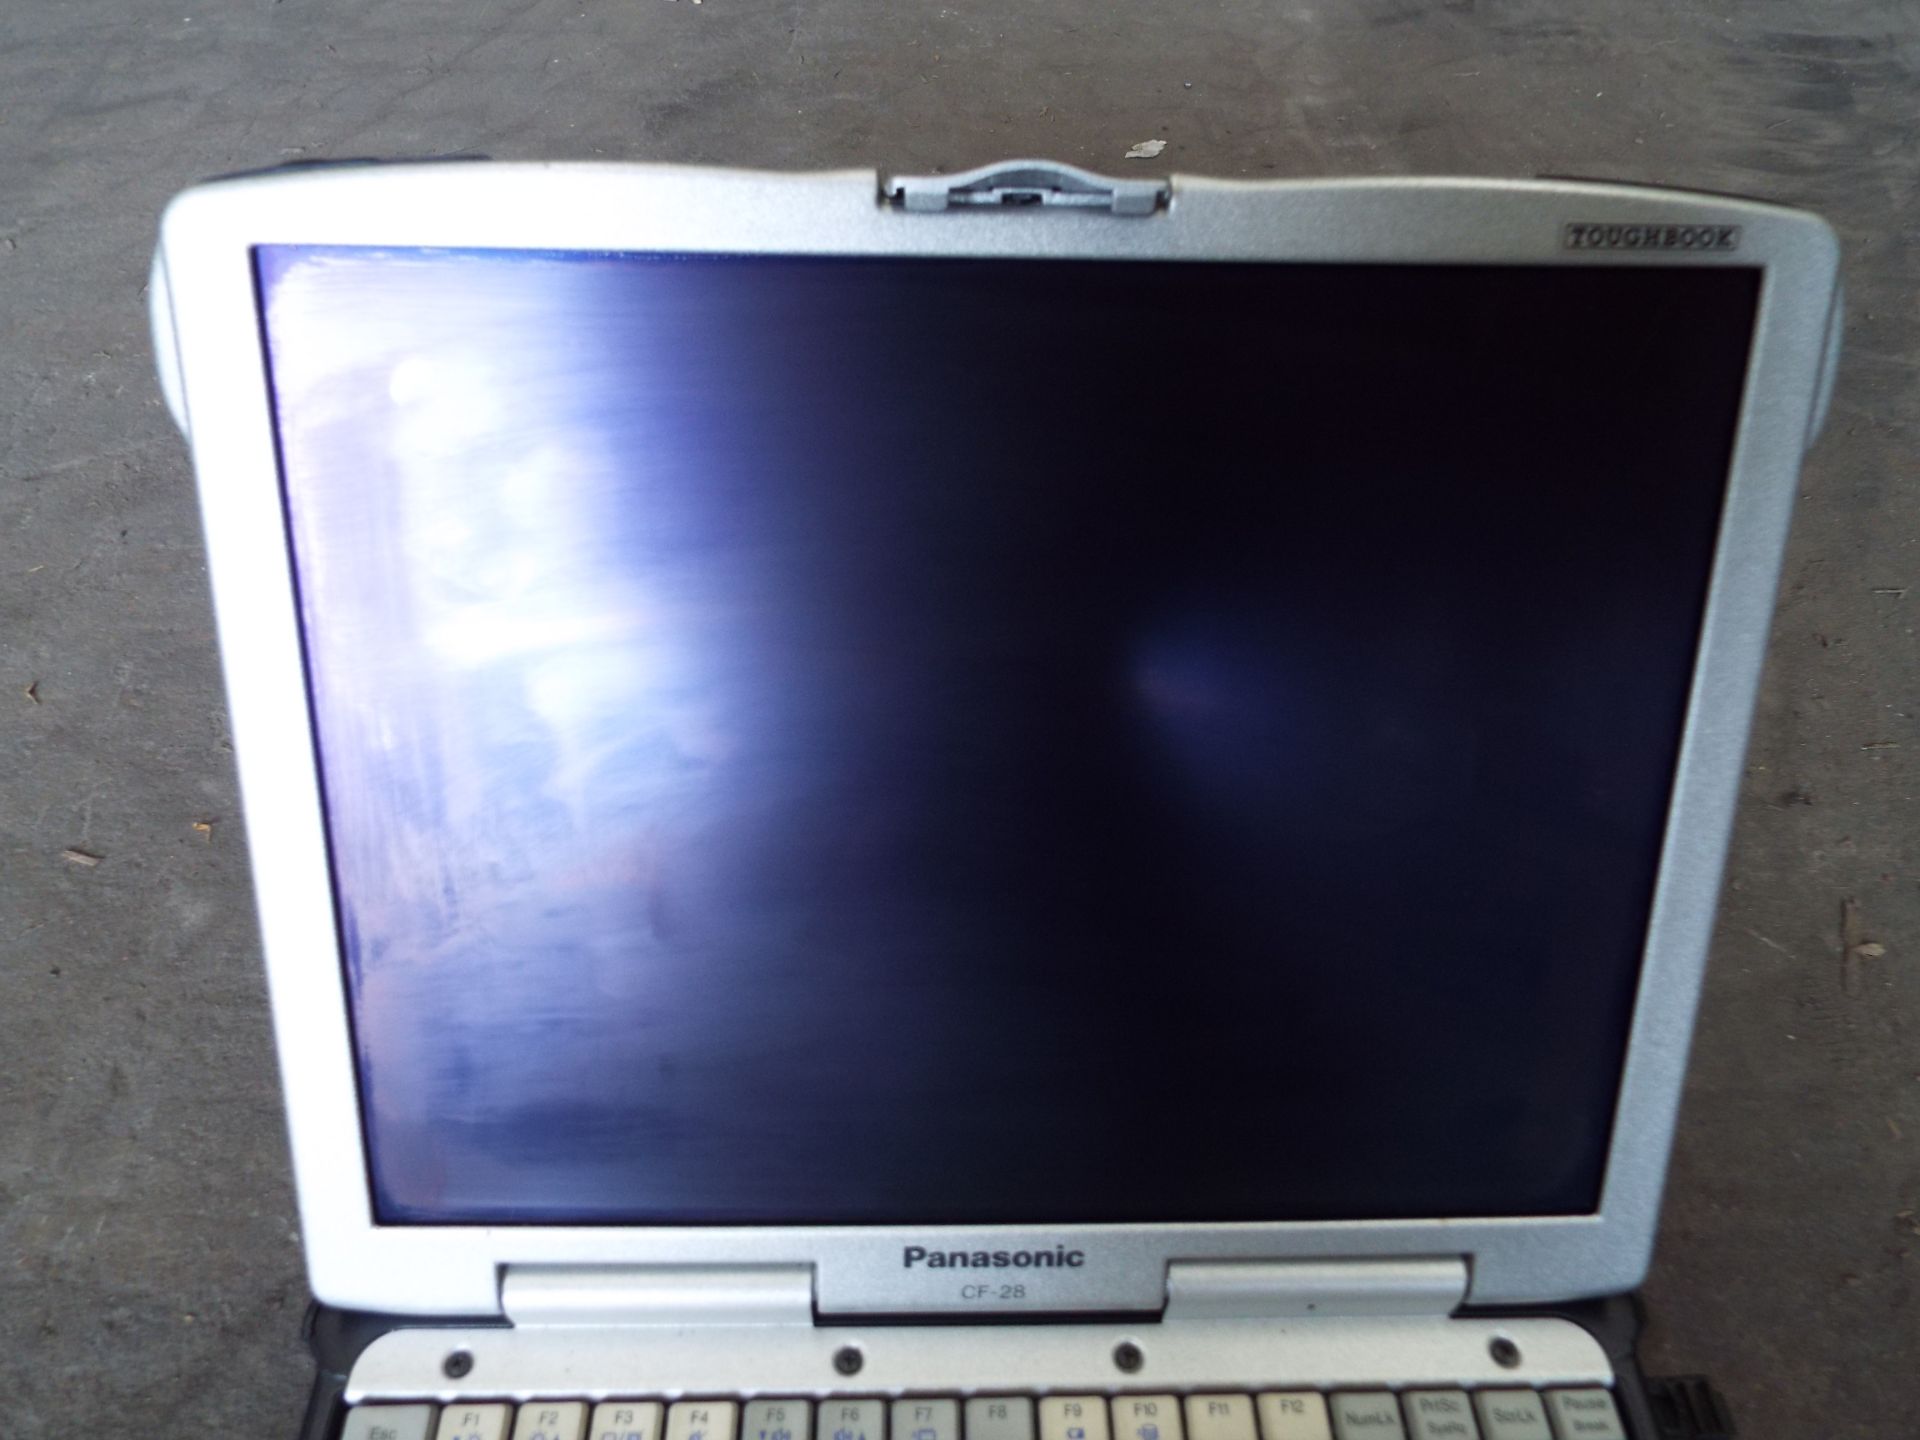 Panasonic CF-28 Toughbook Laptop - Image 2 of 10